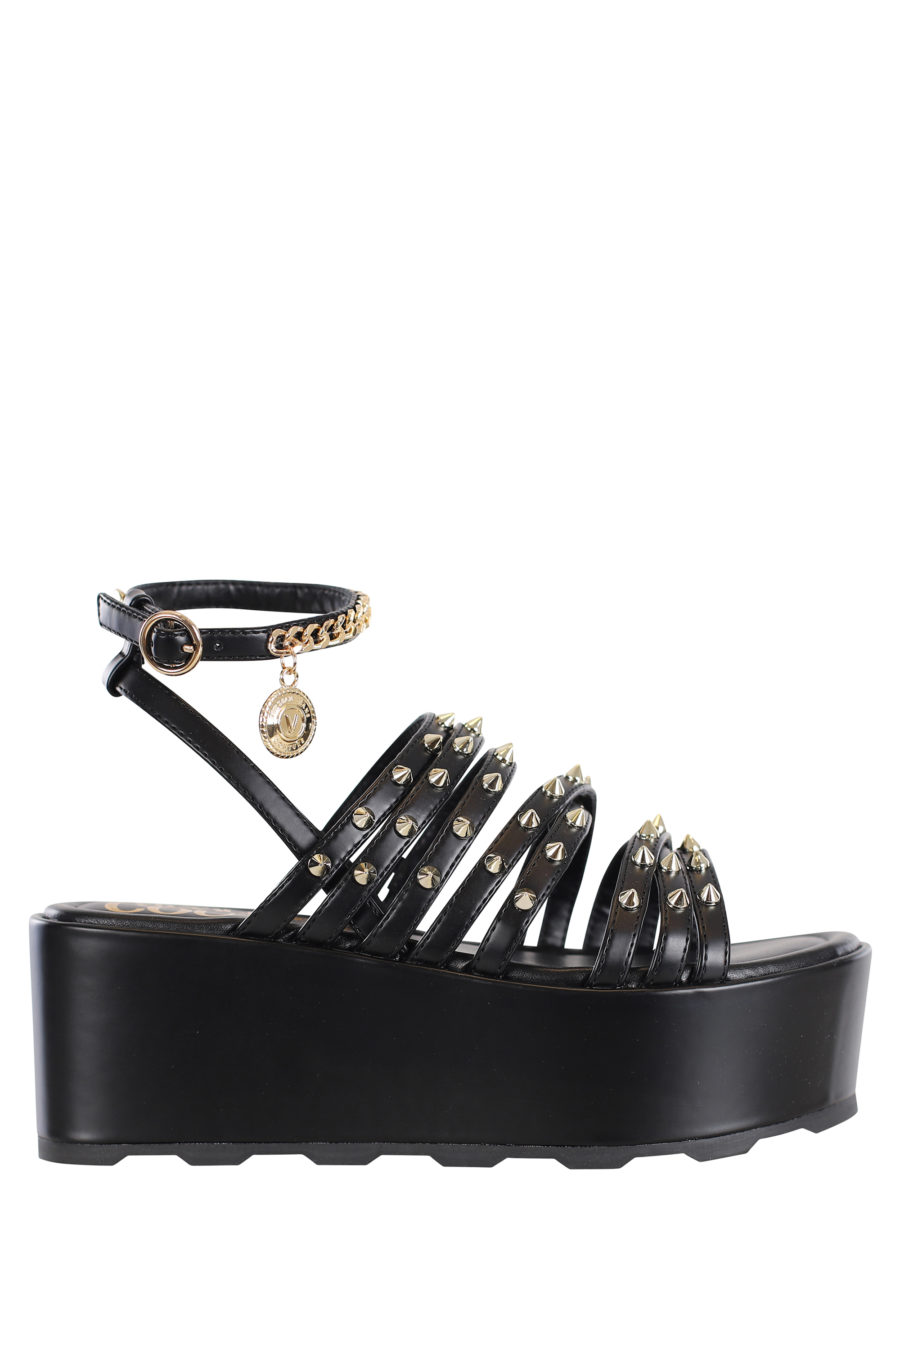 Sandalias negras con plataforma y detalles dorados - IMG 0178